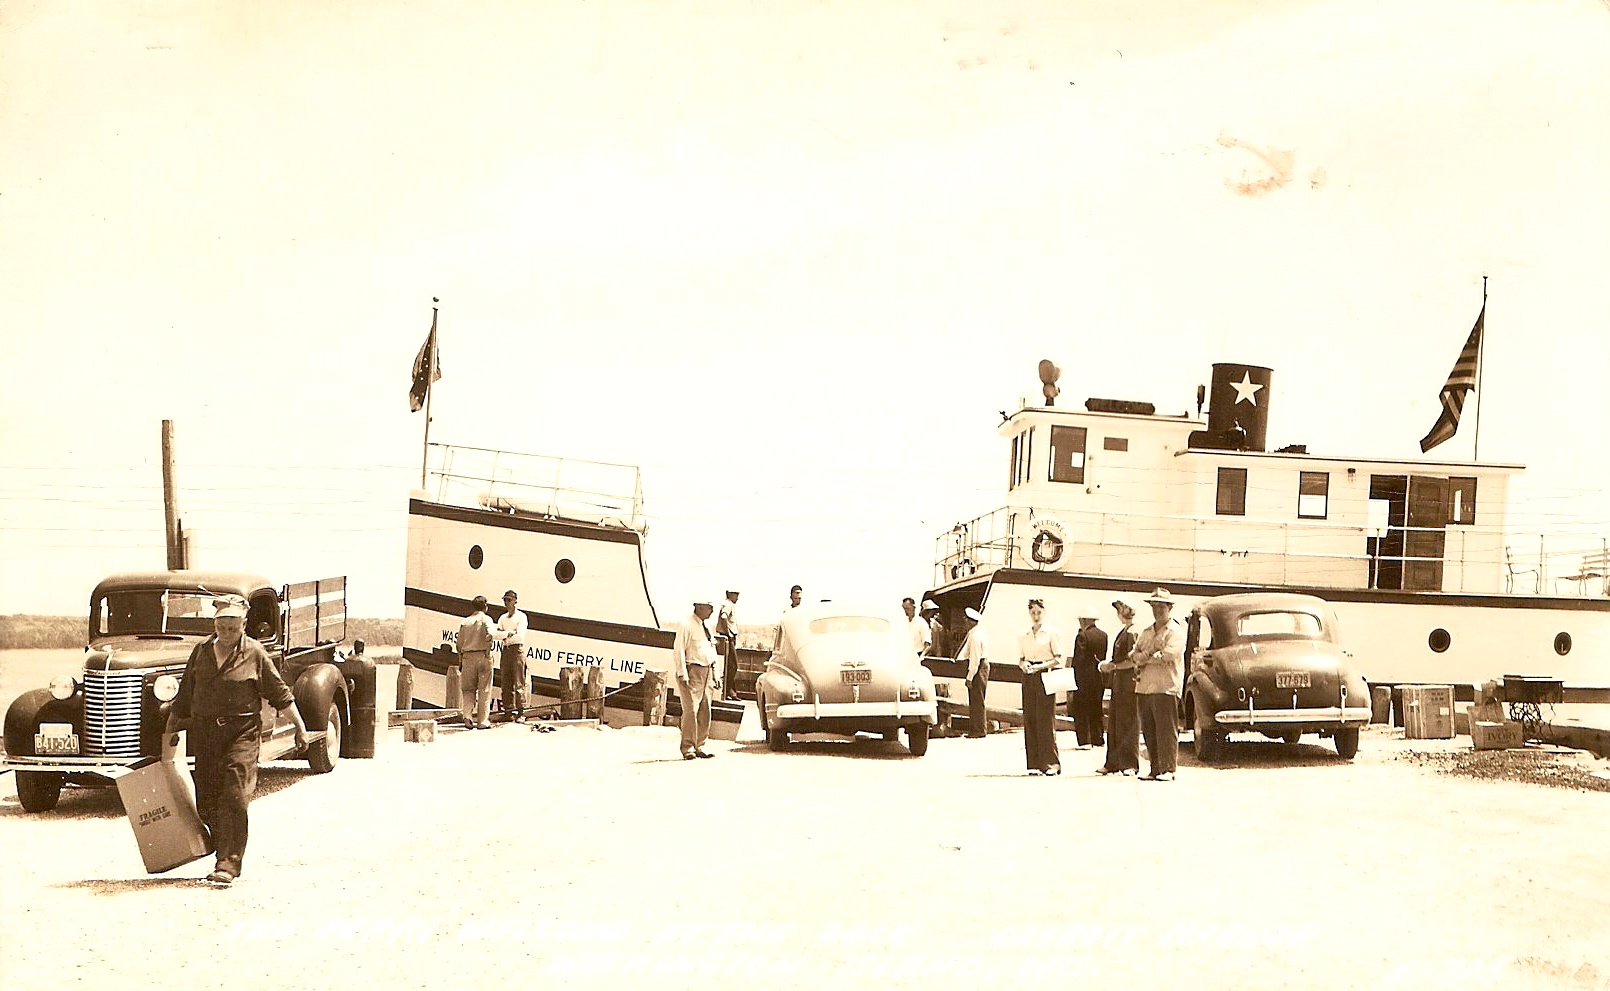 Historic photo of the Washington Island Ferry Line